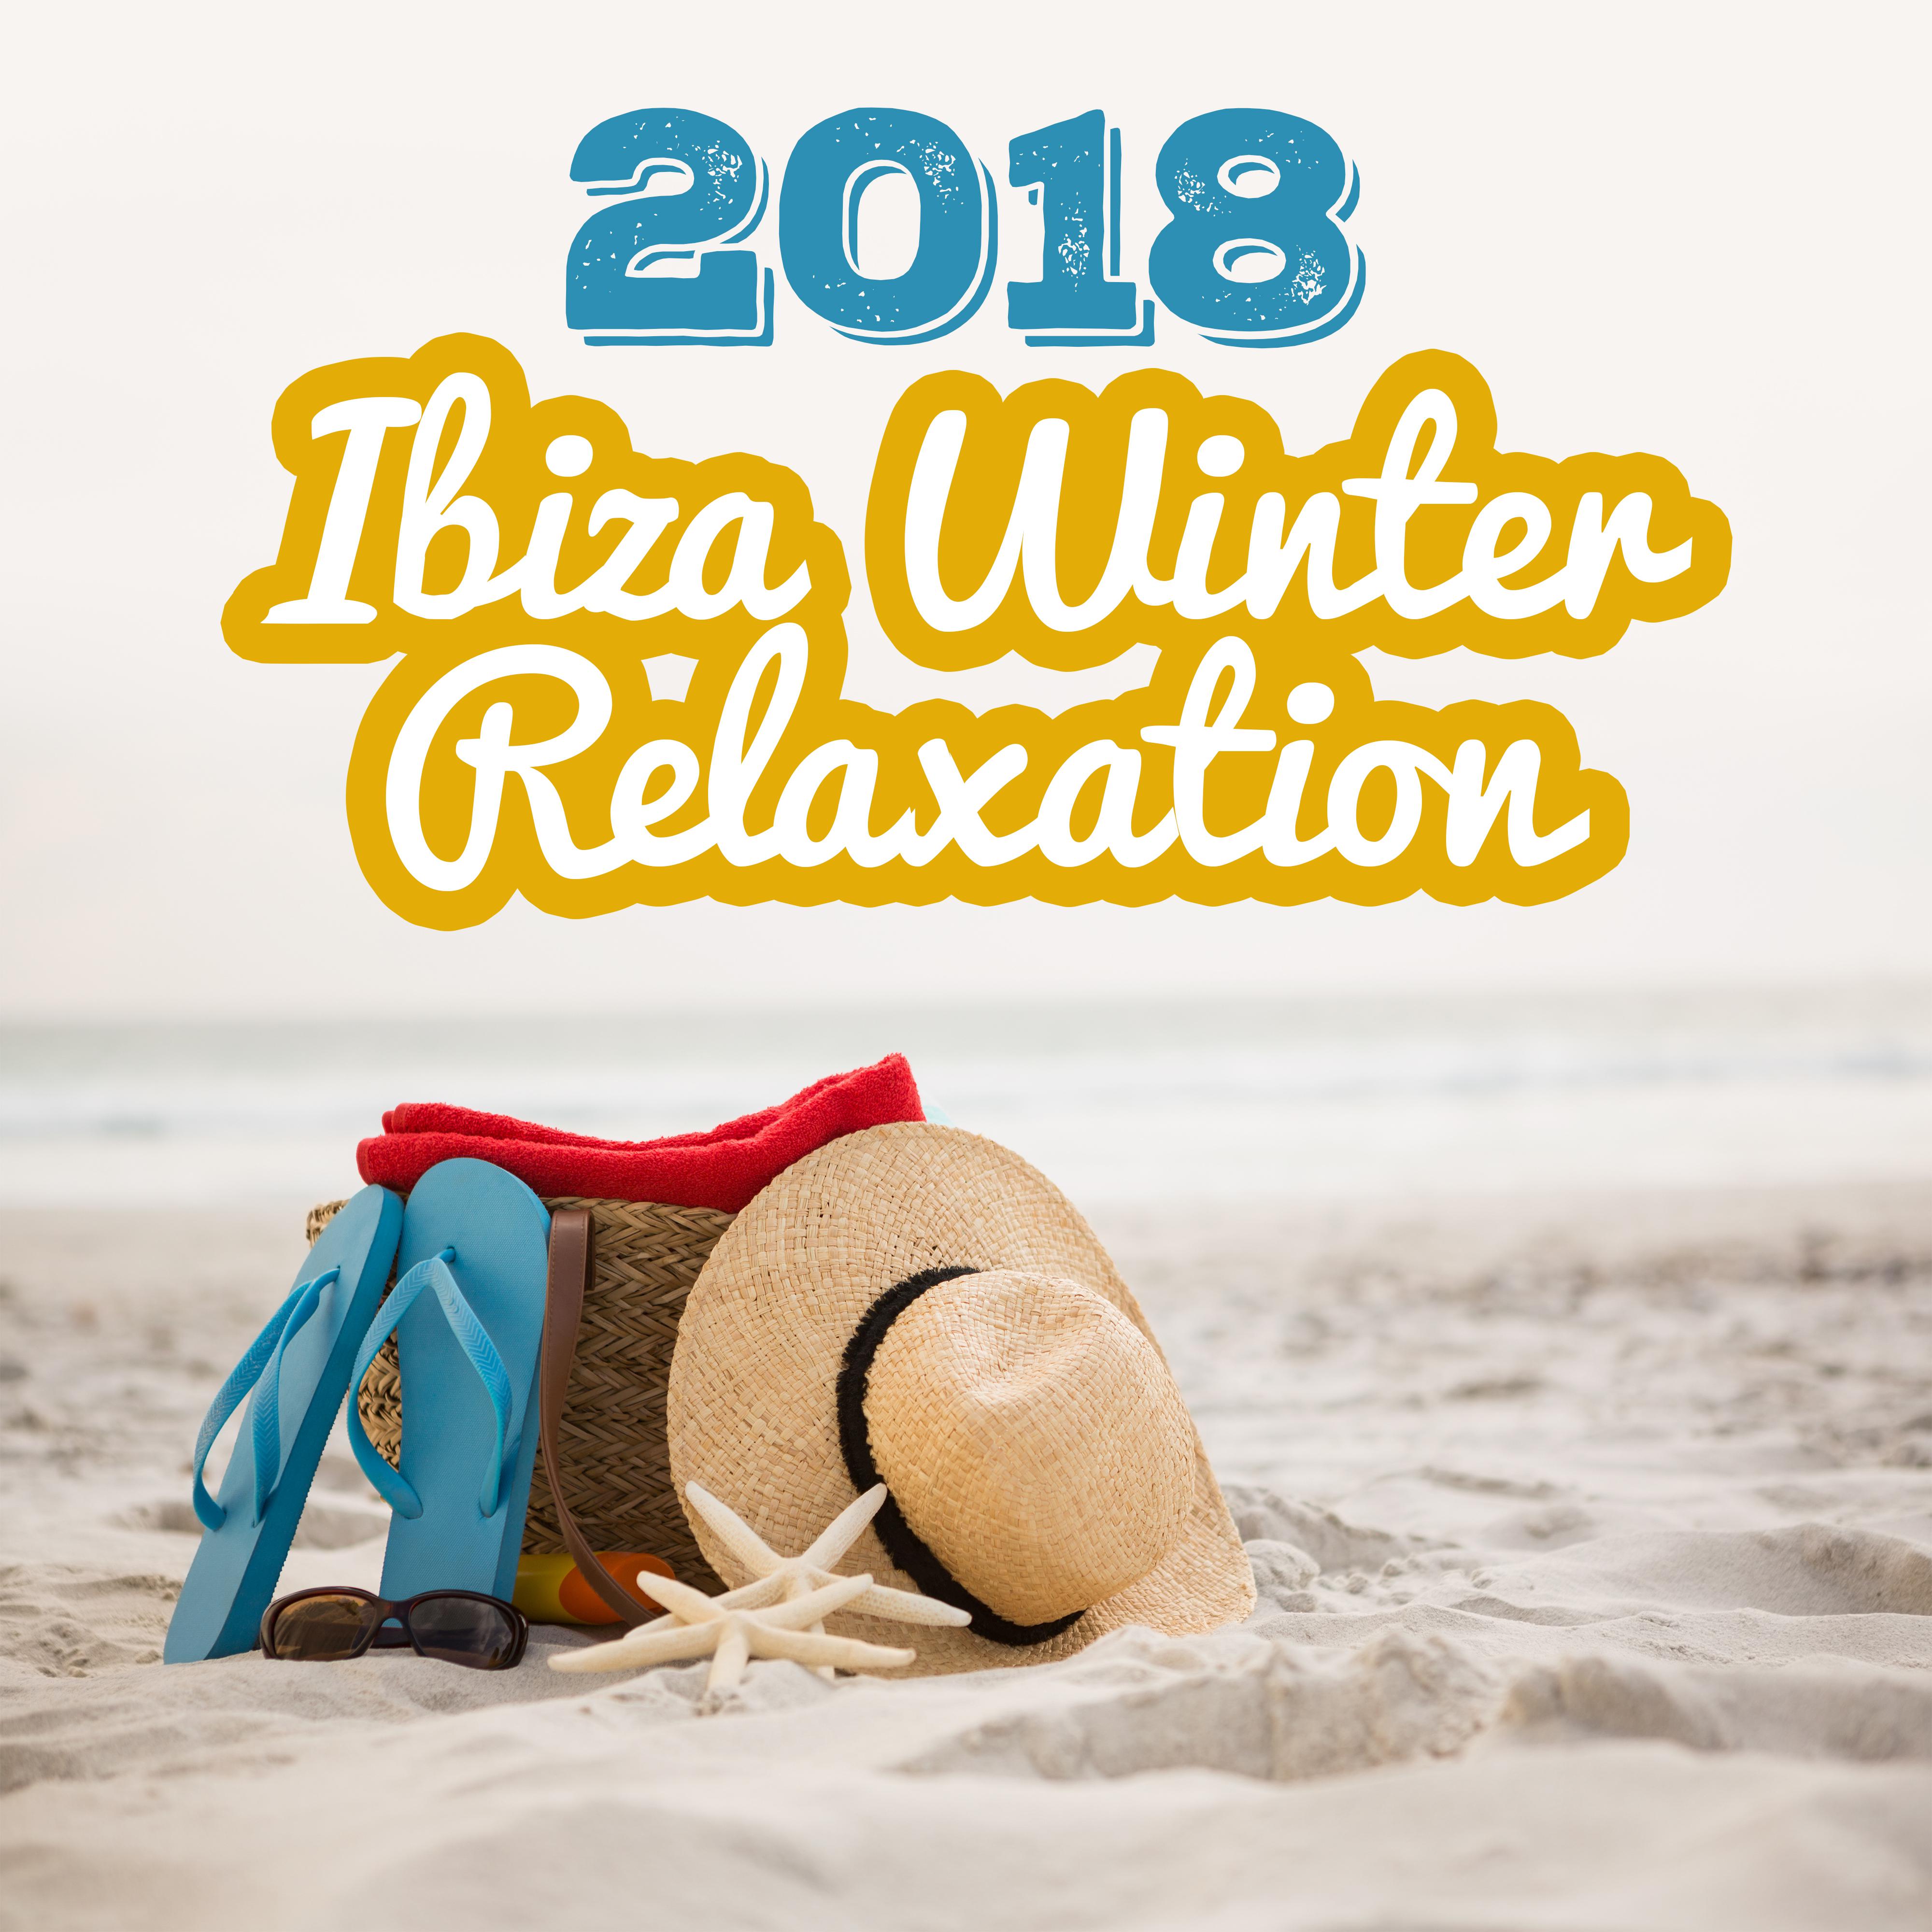 2018 Ibiza Winter Relaxation